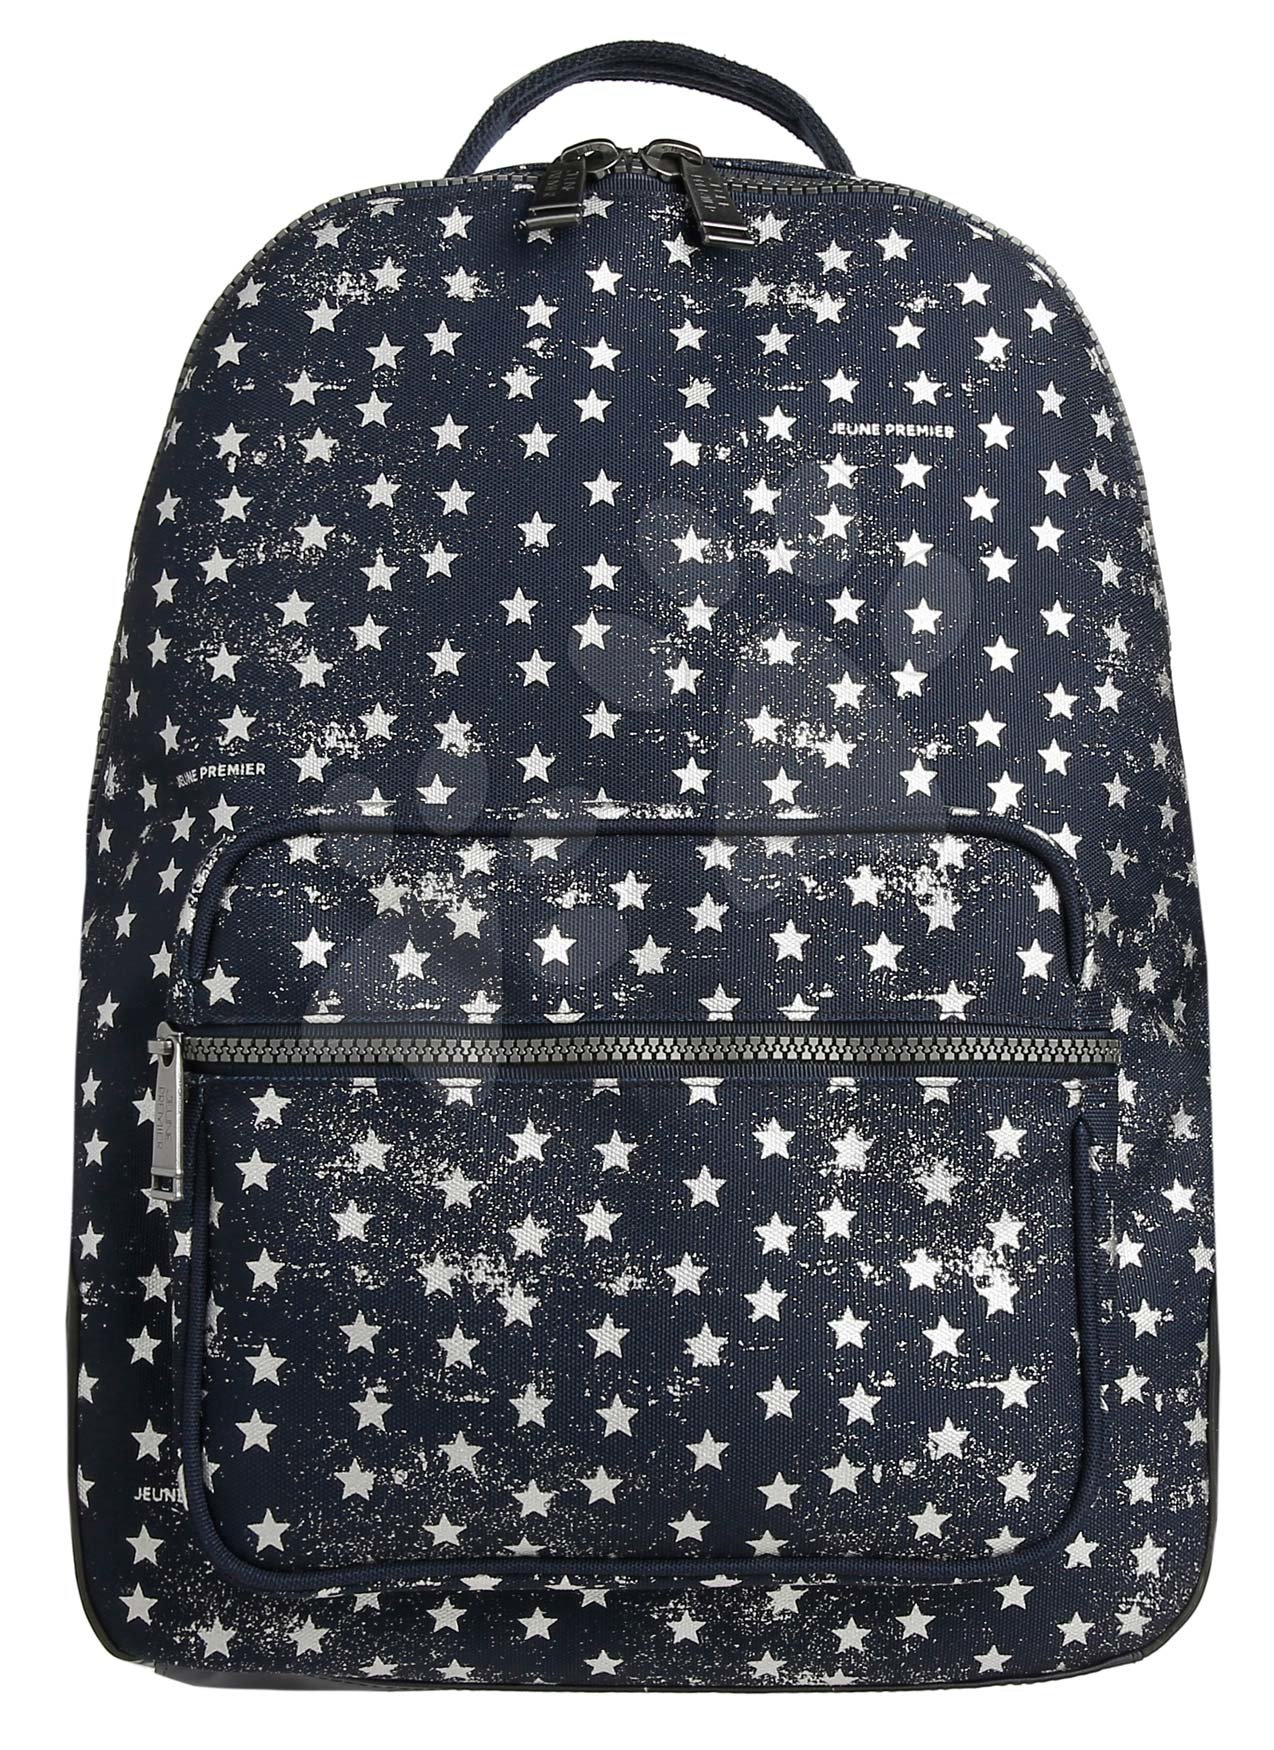 Školské tašky a batohy - Školská taška batoh Backpack Bobbie Stars Silver Jeune Premier ergonomický luxusné prevedenie